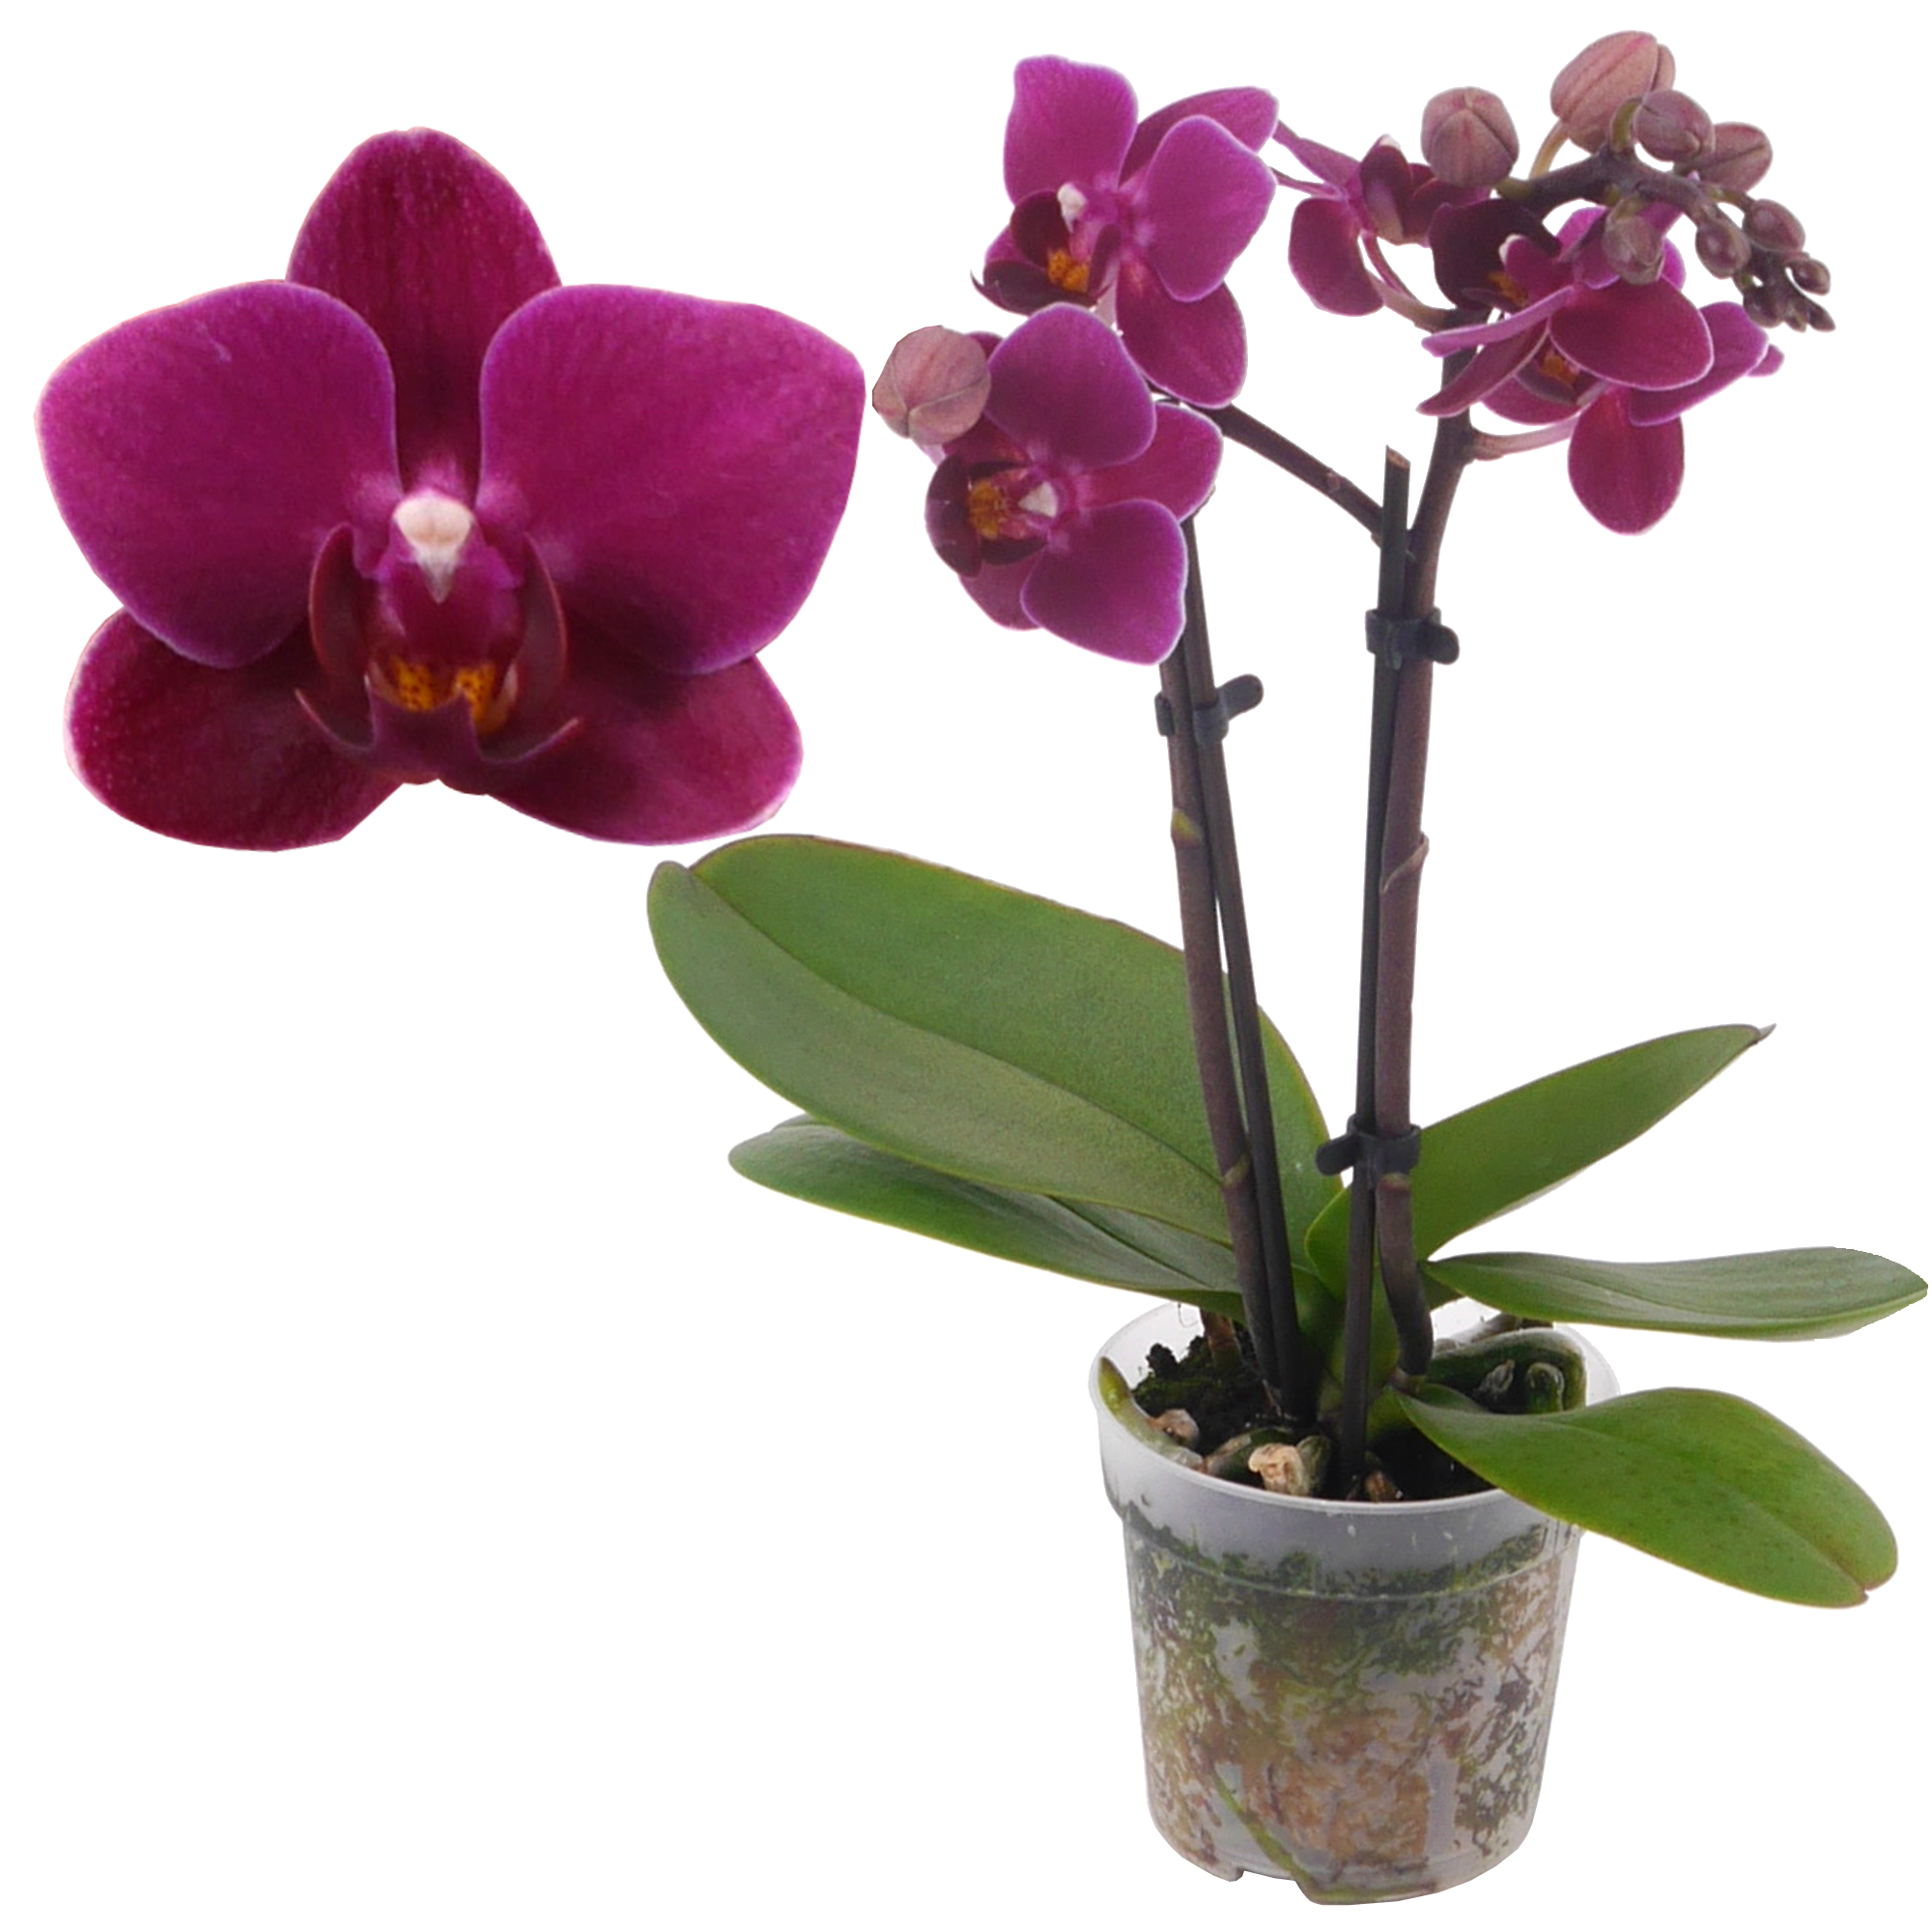 Schmetterlingsorchidee 'Emma' 2 Rispen violett, 7 cm Topf + product picture